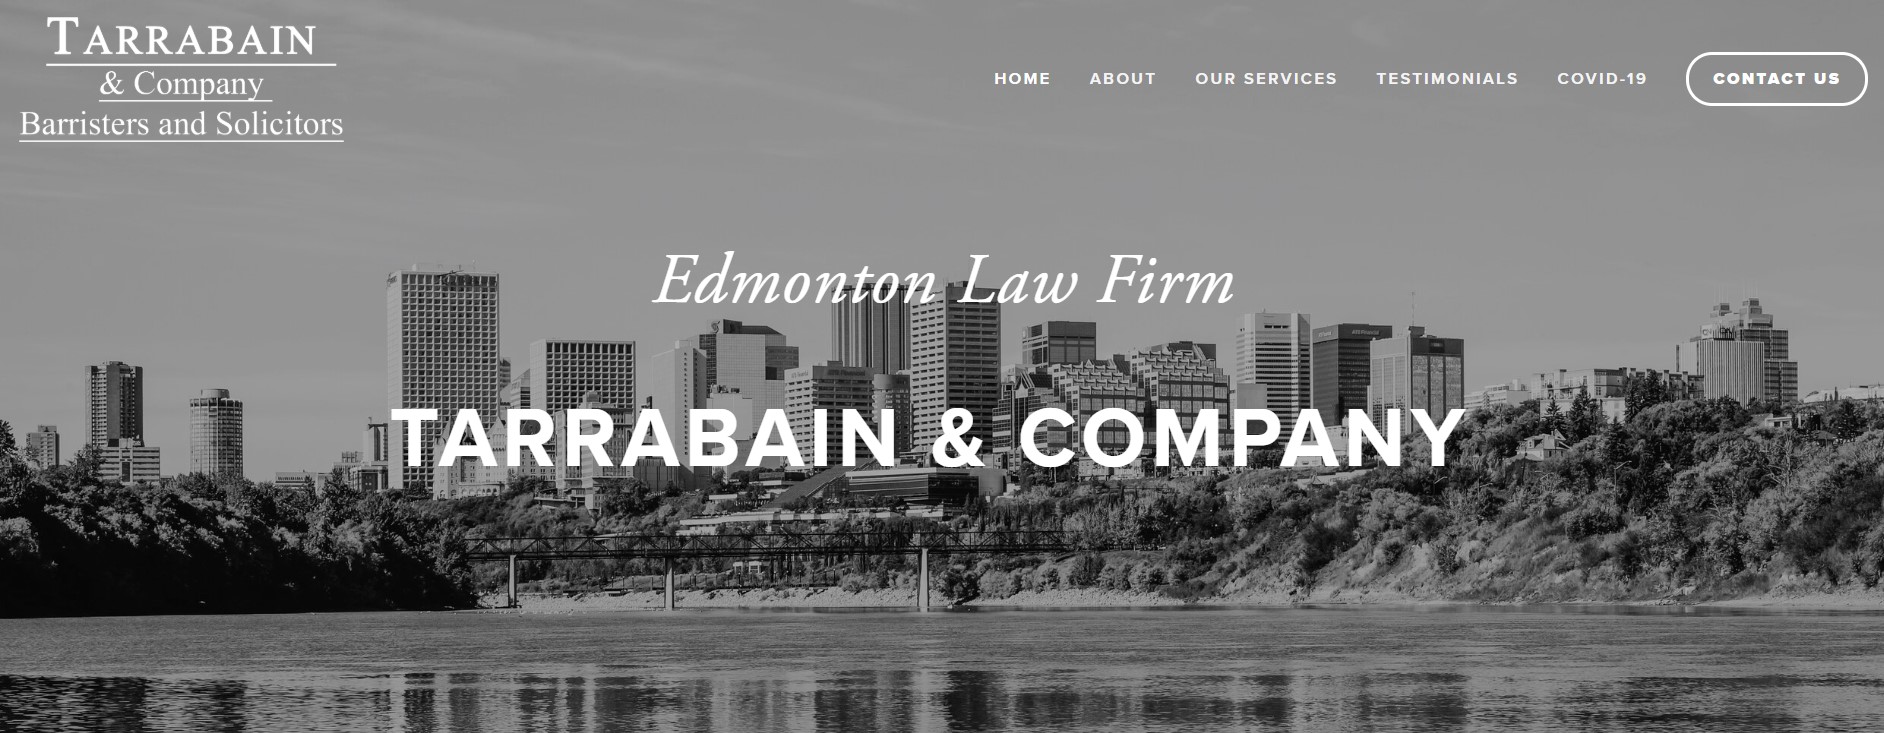 tarrabain & co. corporate attorney in edmonton